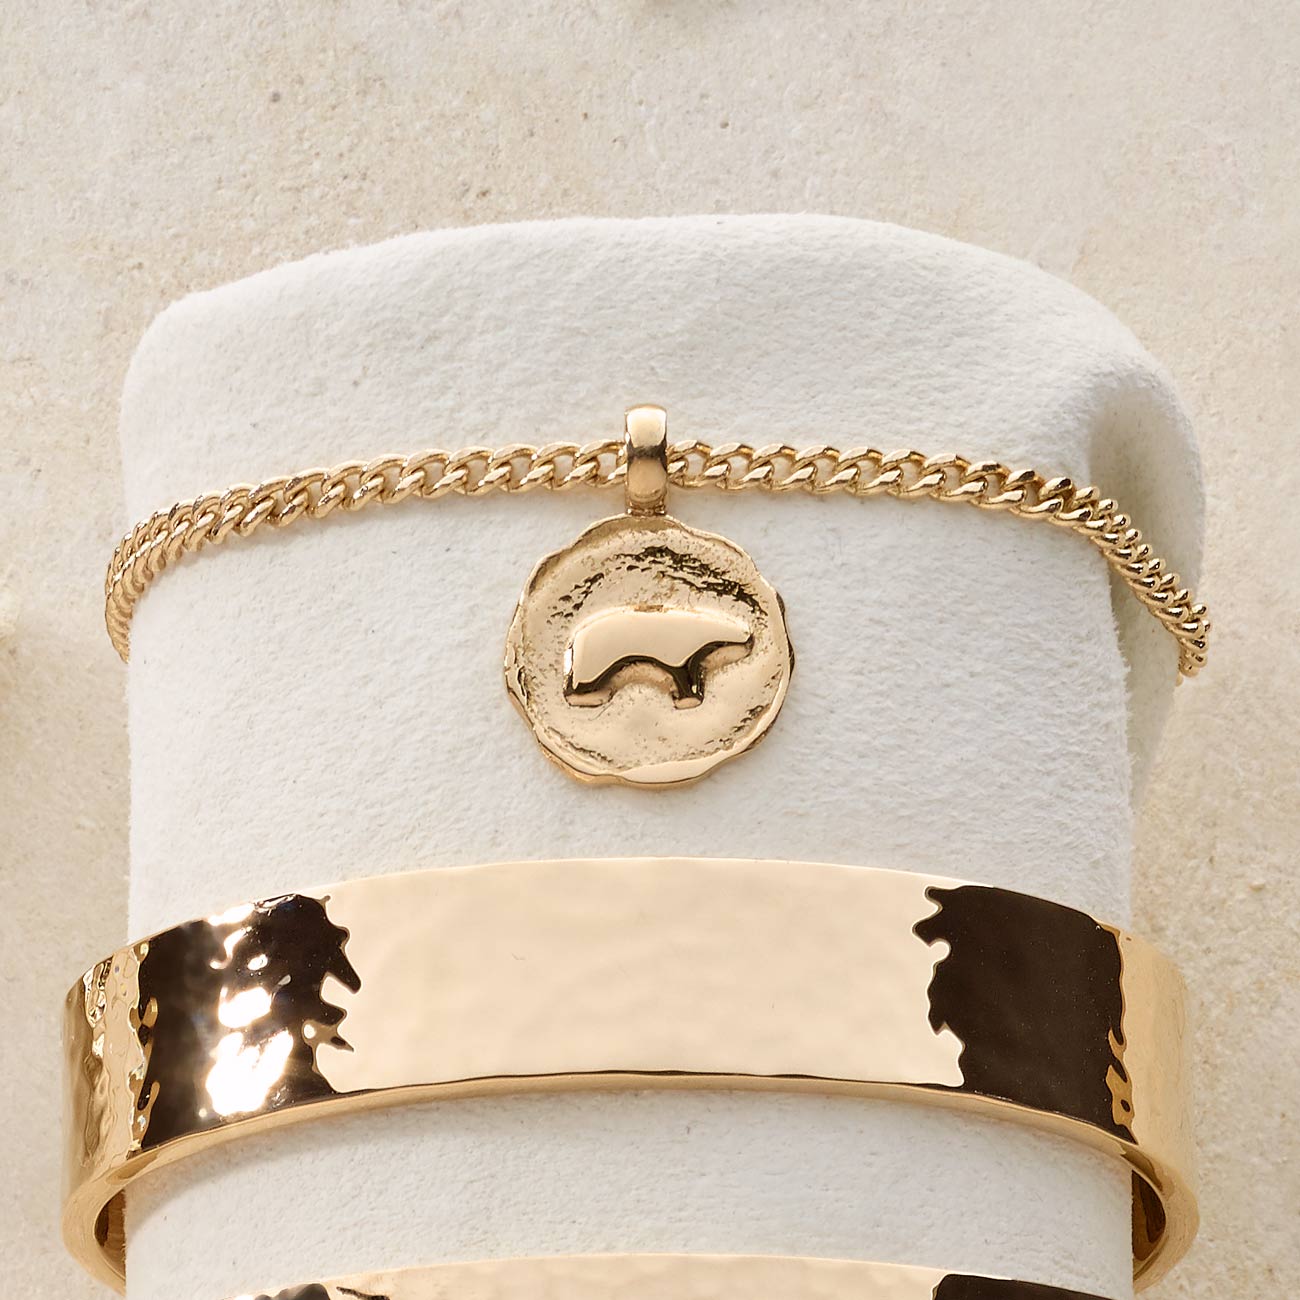 IF ME Vintage Bohemian Gold Color Elephant Heart Charms Bracelets for Women  Fashion Chain Gift Pulseira Feminina Jewelry